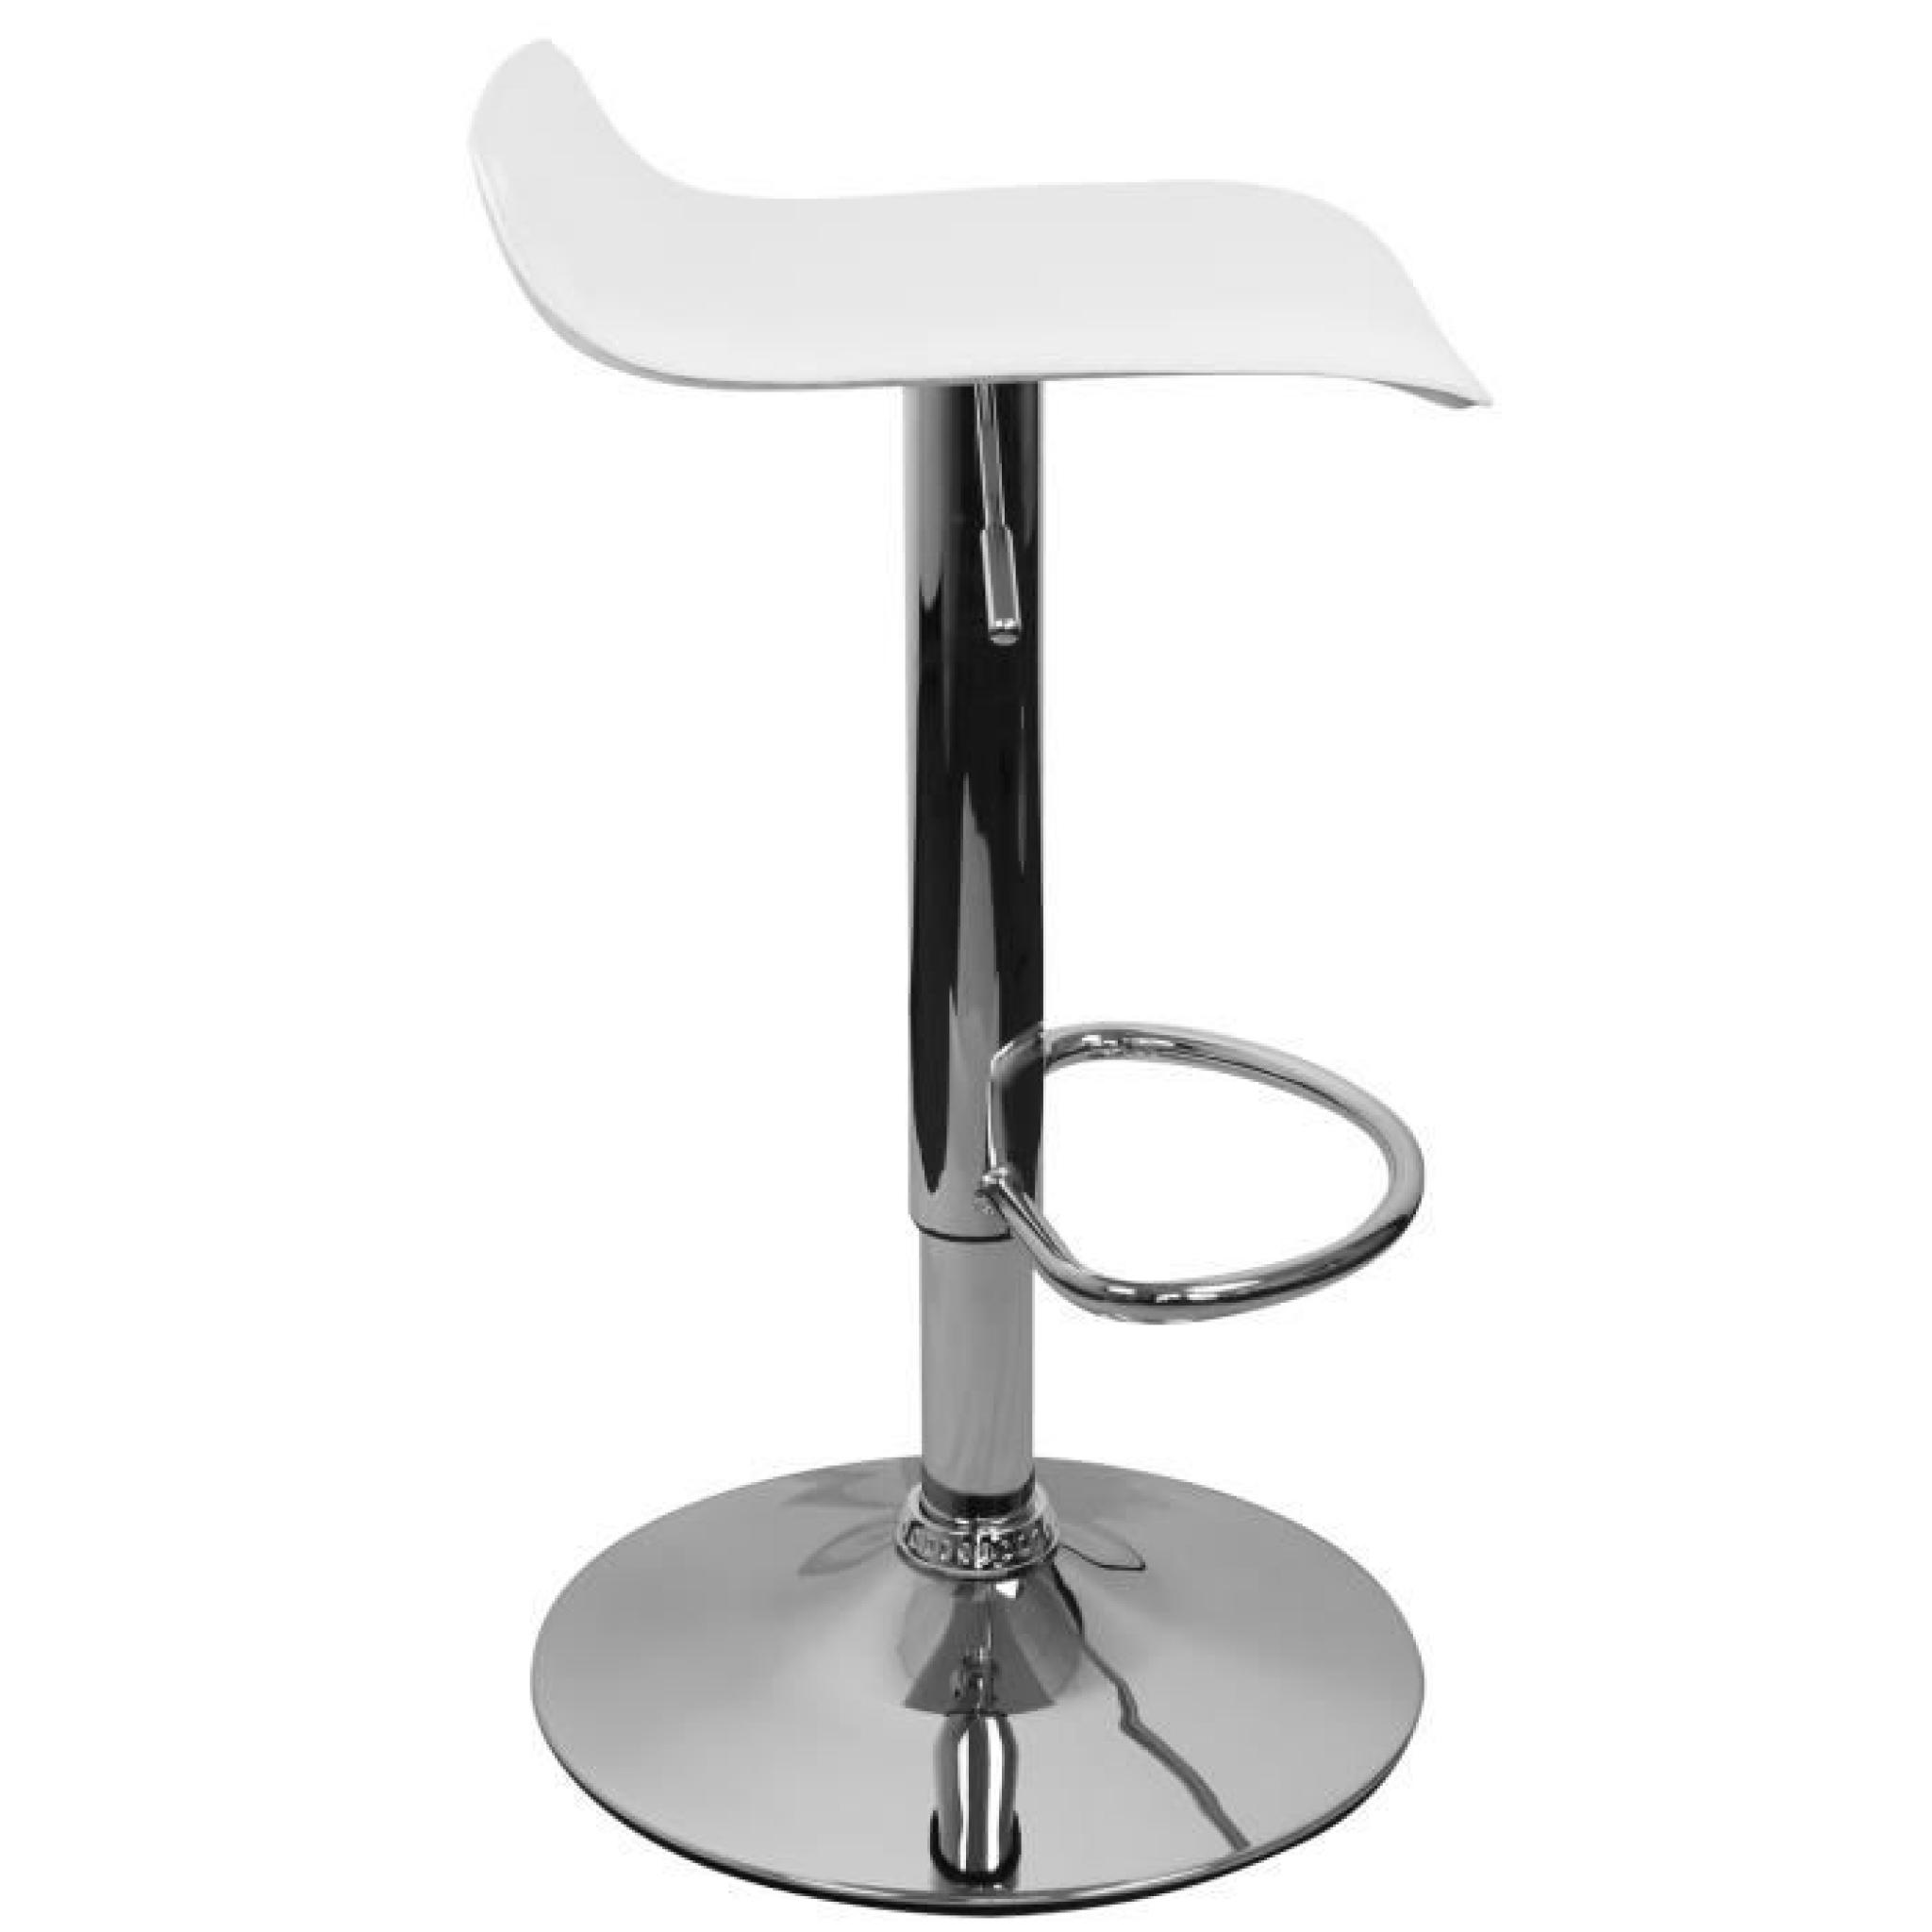 Chaise de bar en PU coloris blanc, H 66 - 86 x L 39 x P 37 cm pas cher